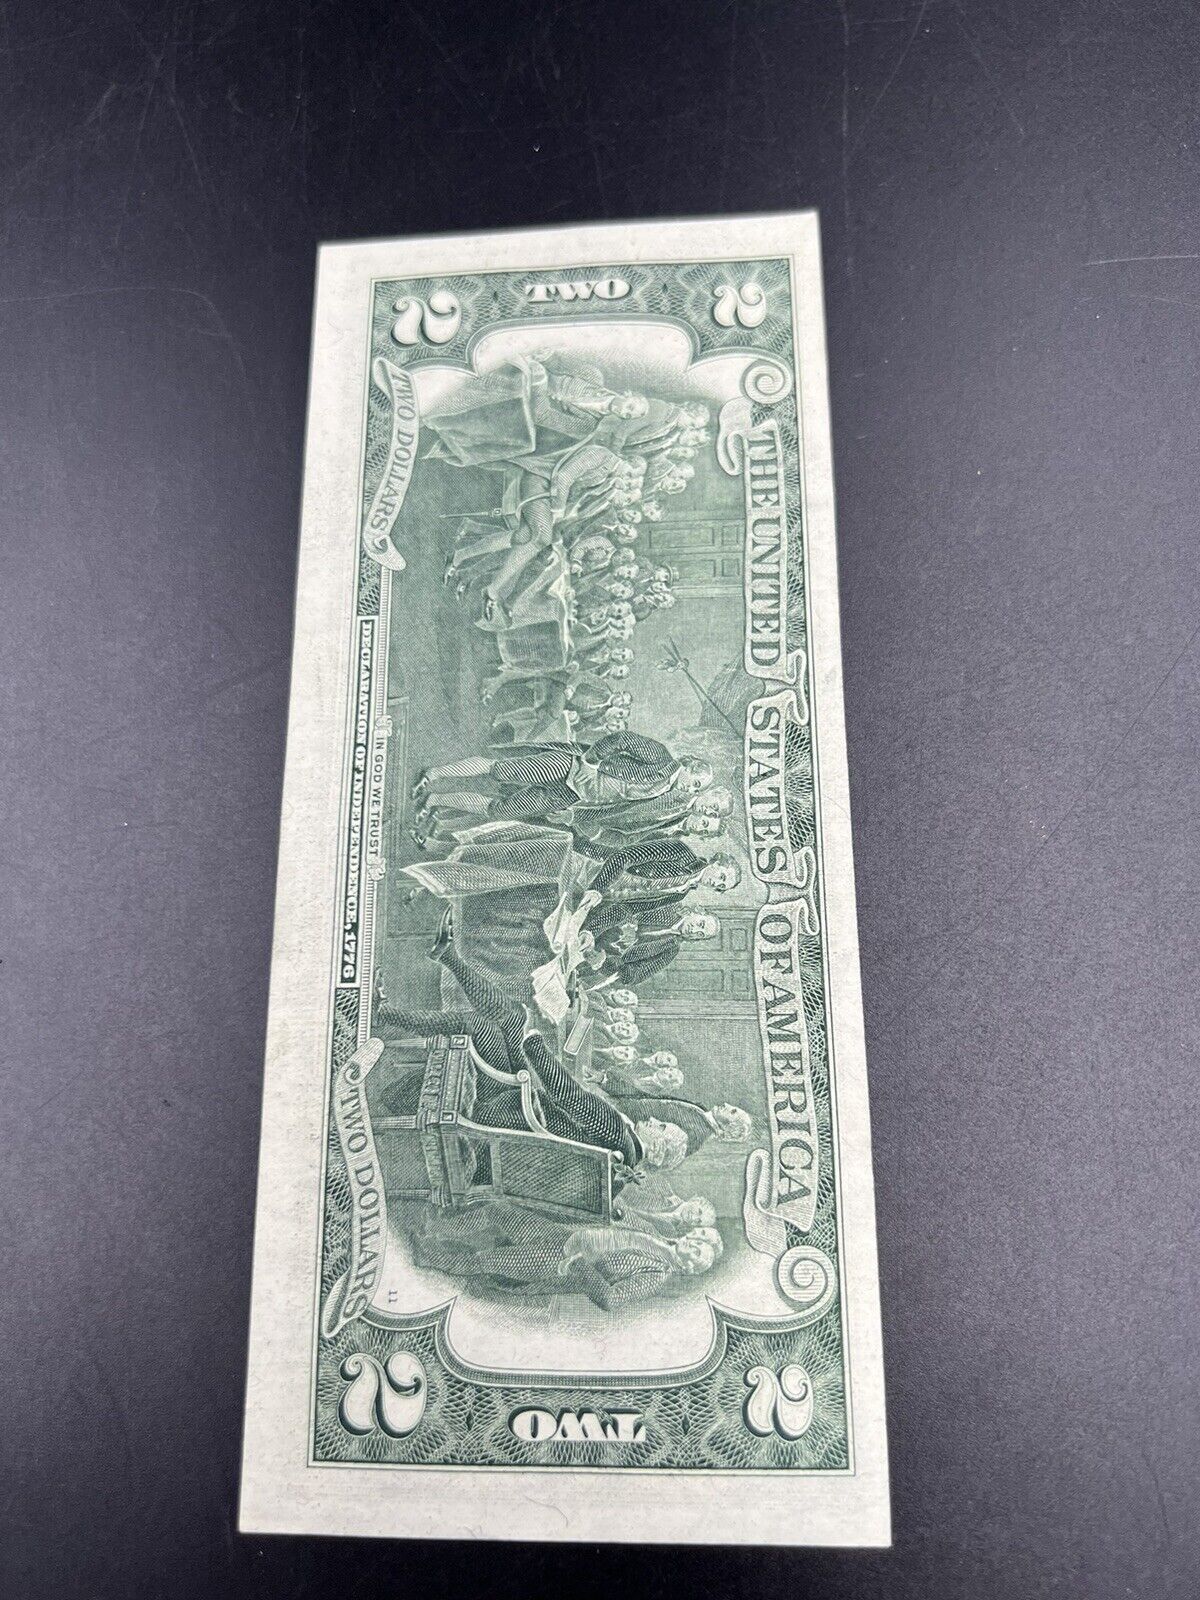 1976 $2 FRN Bicentennial Two Dollar Bill Green Seal Birthday Note 05 31 52 UNC